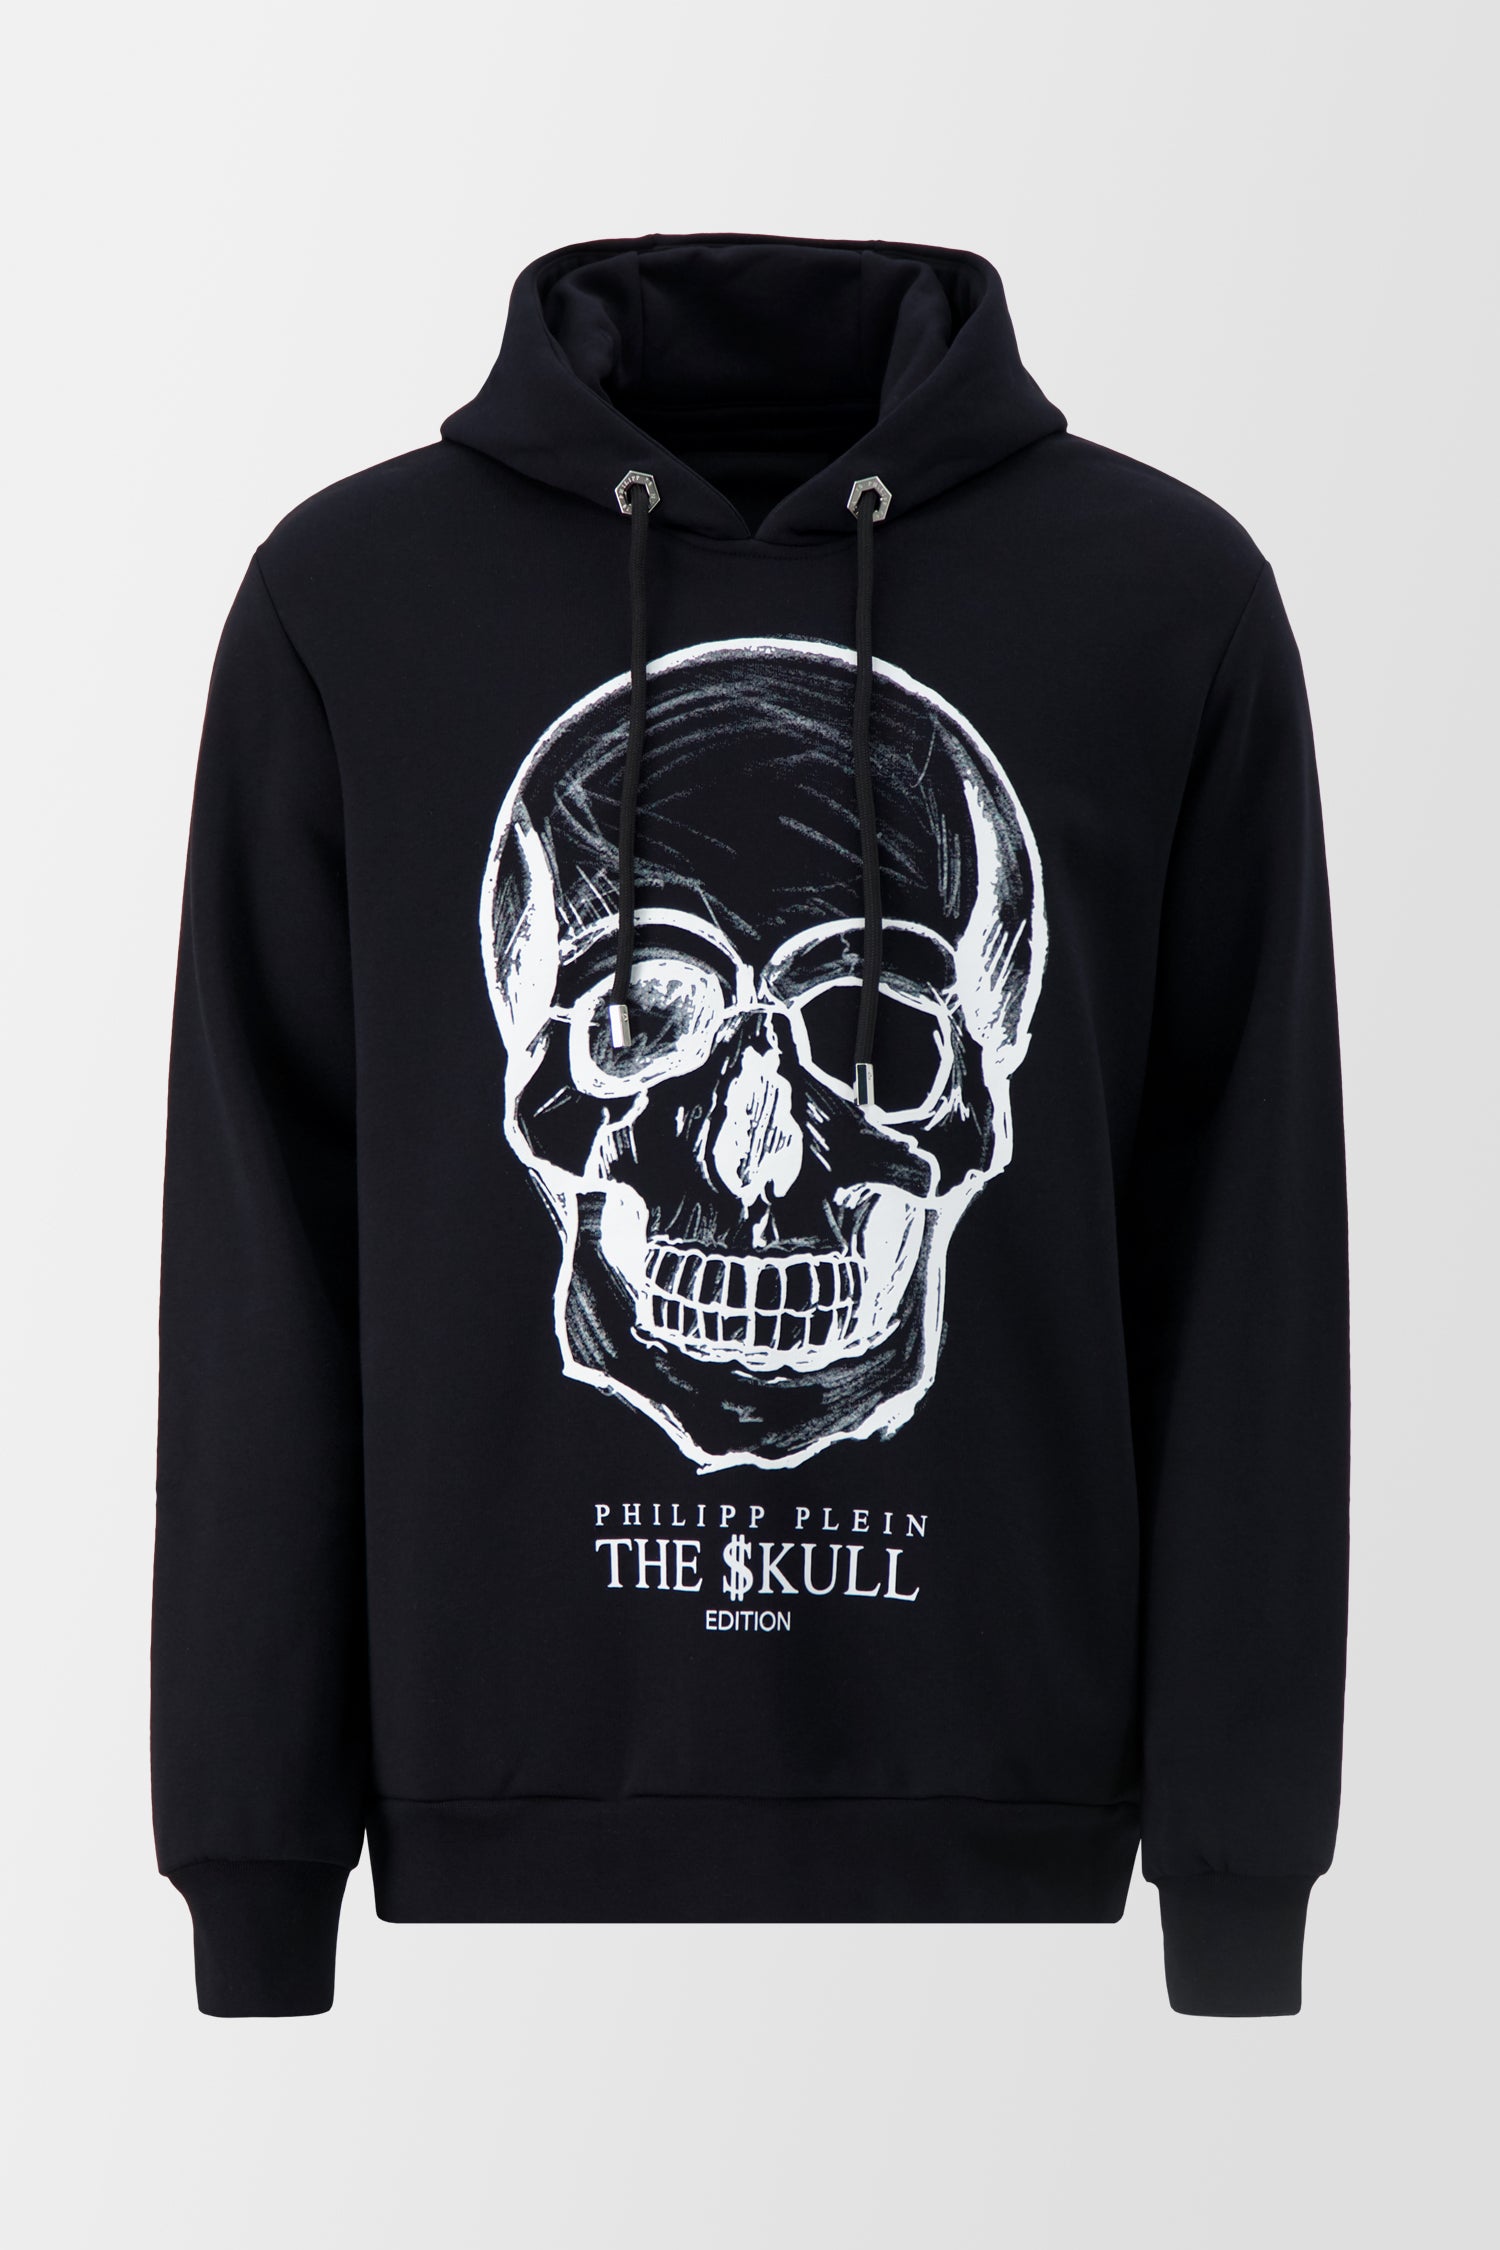 Philipp Plein Black Print Skull Hoodie Sweatshirt